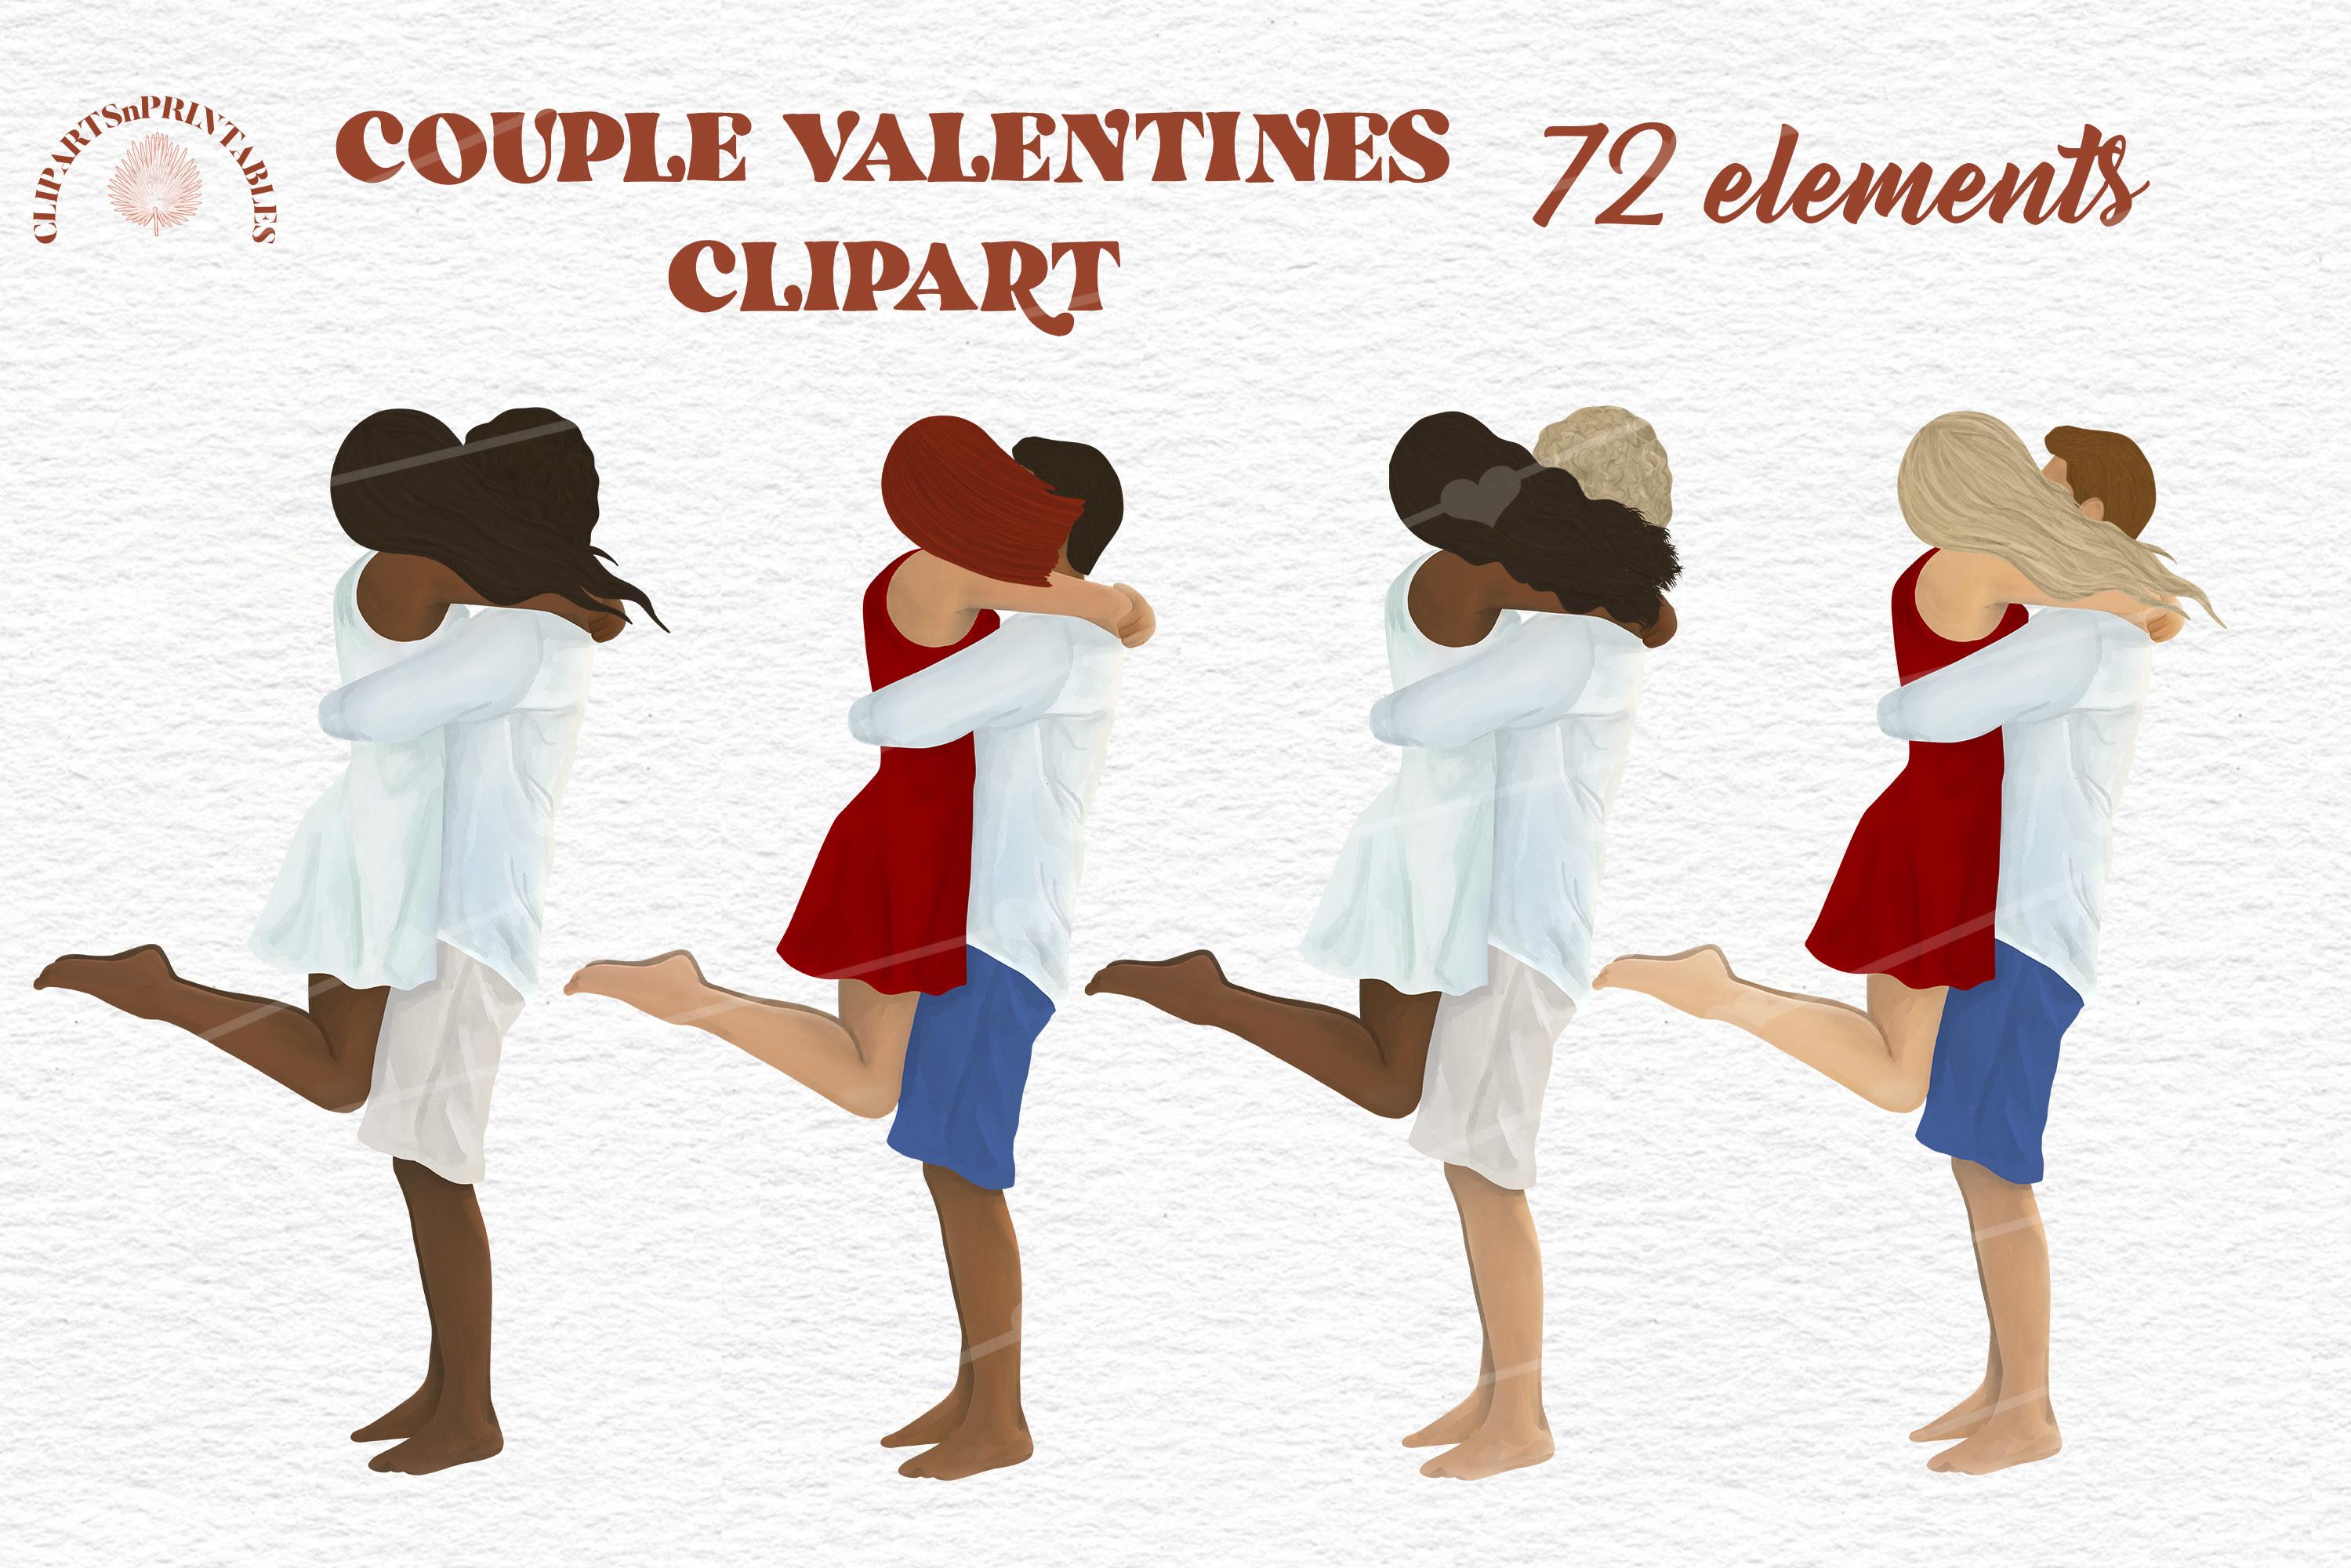 Couple Valentine's Clipart Lovers Hug